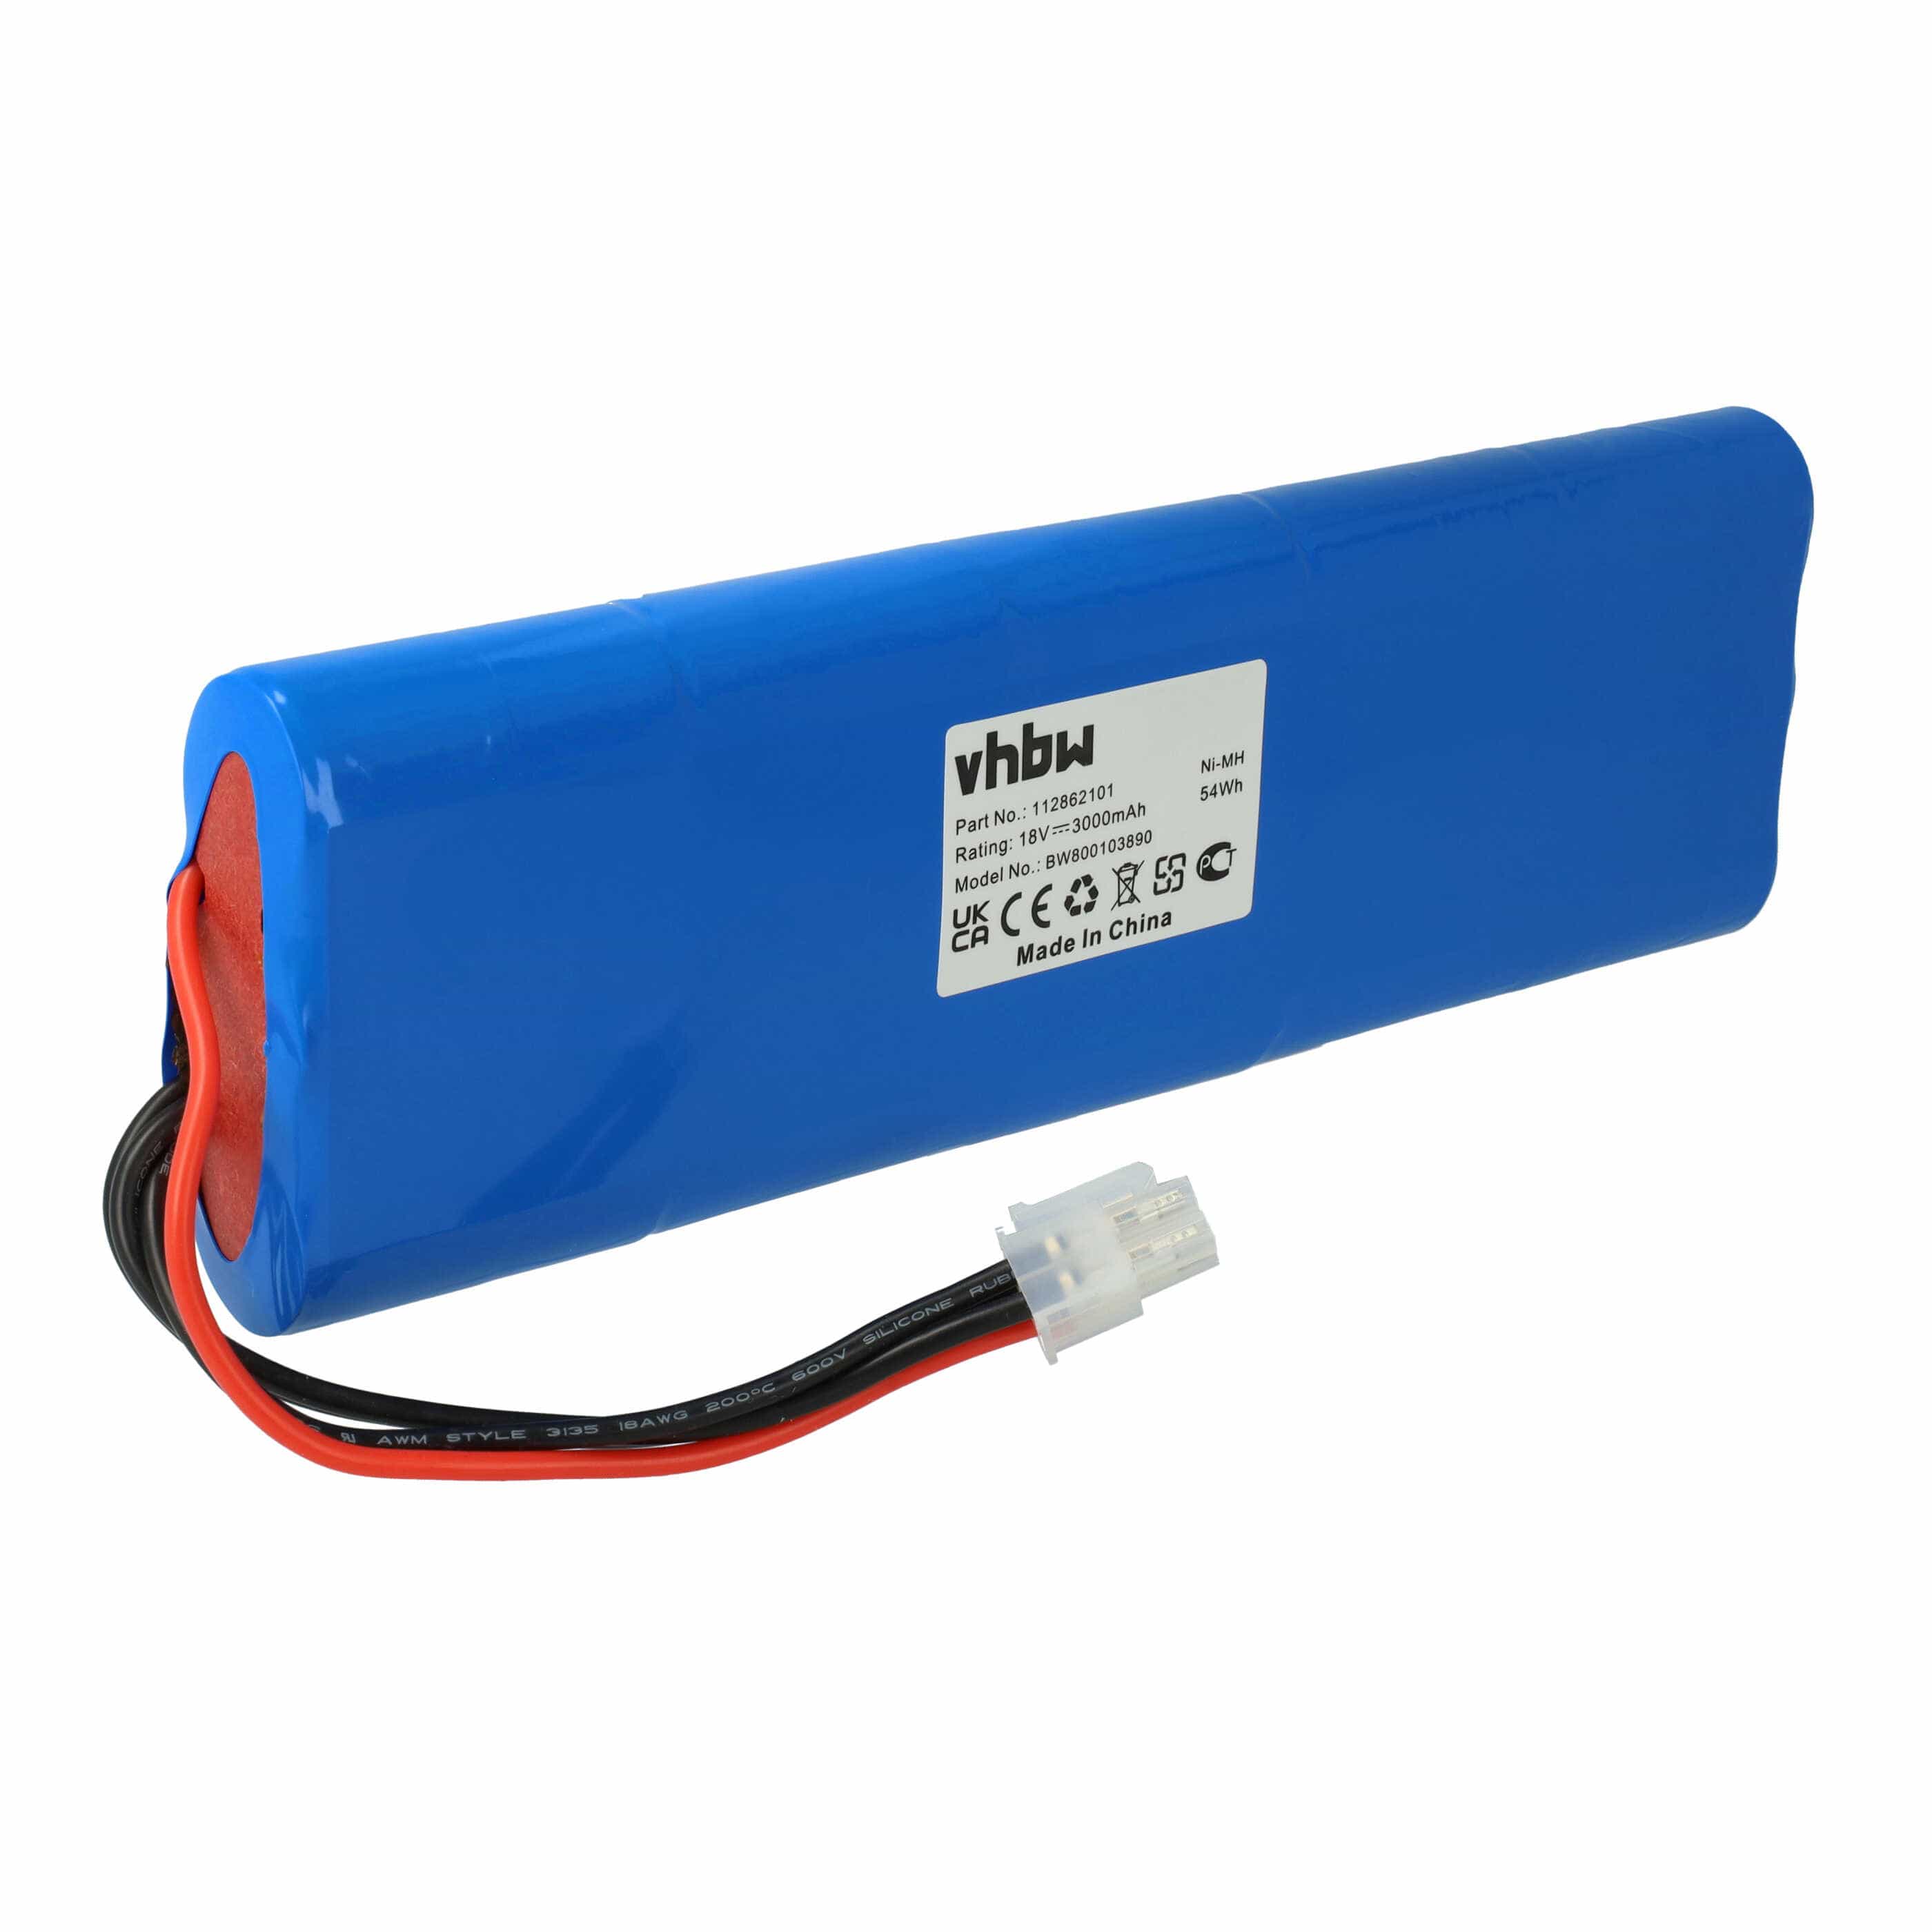 Akumulator do robota zamiennik Elektrolux 2192110-02 - 3000 mAh 18 V NiMH, niebieski